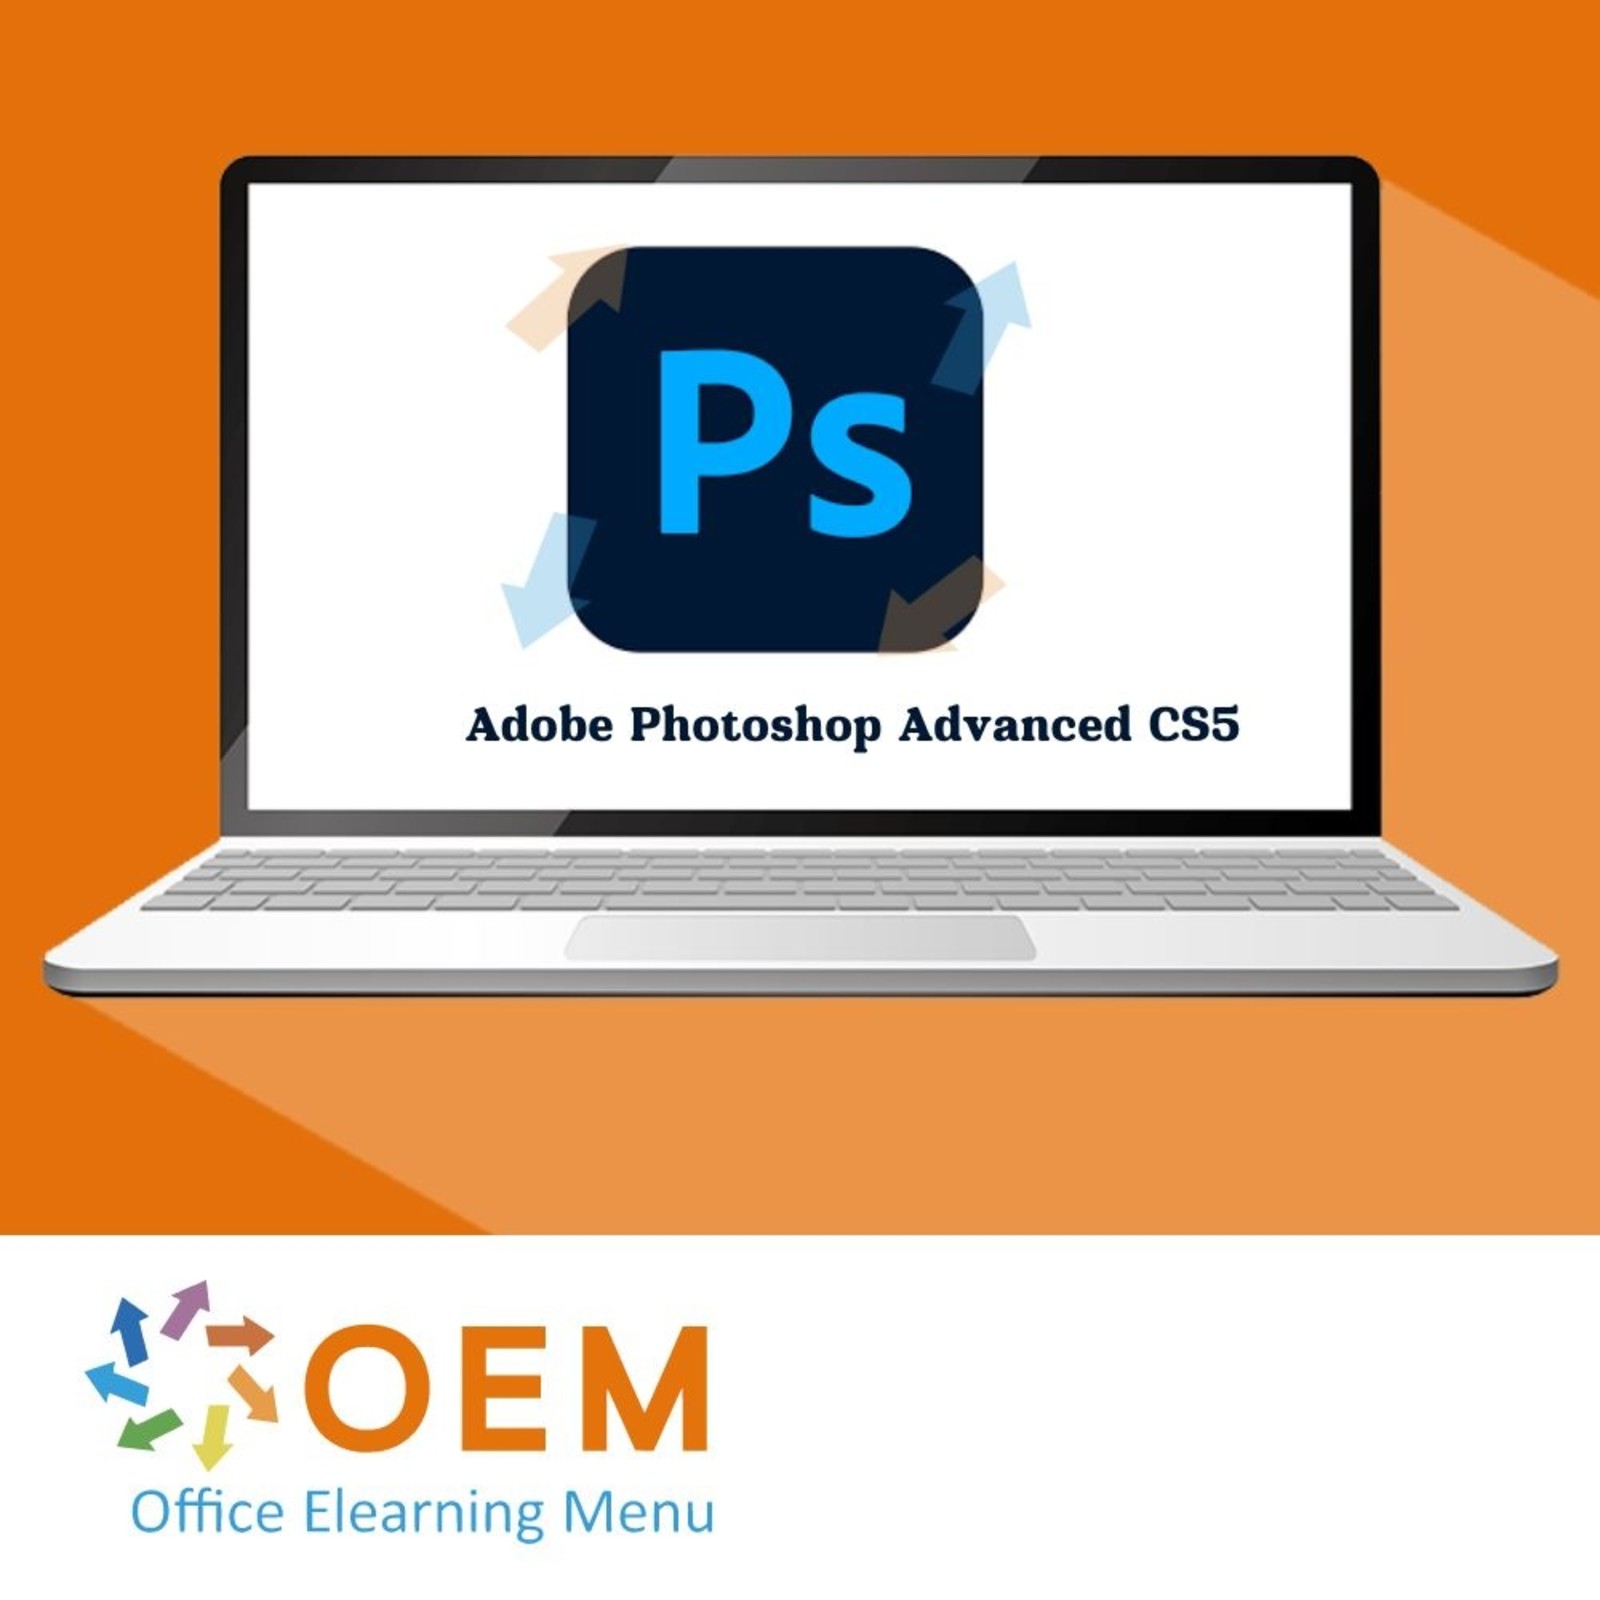 Photoshop Training: Professionele Beeldbewerking & Ontwerp Adobe Photoshop Advanced Course CS5 E-Learning